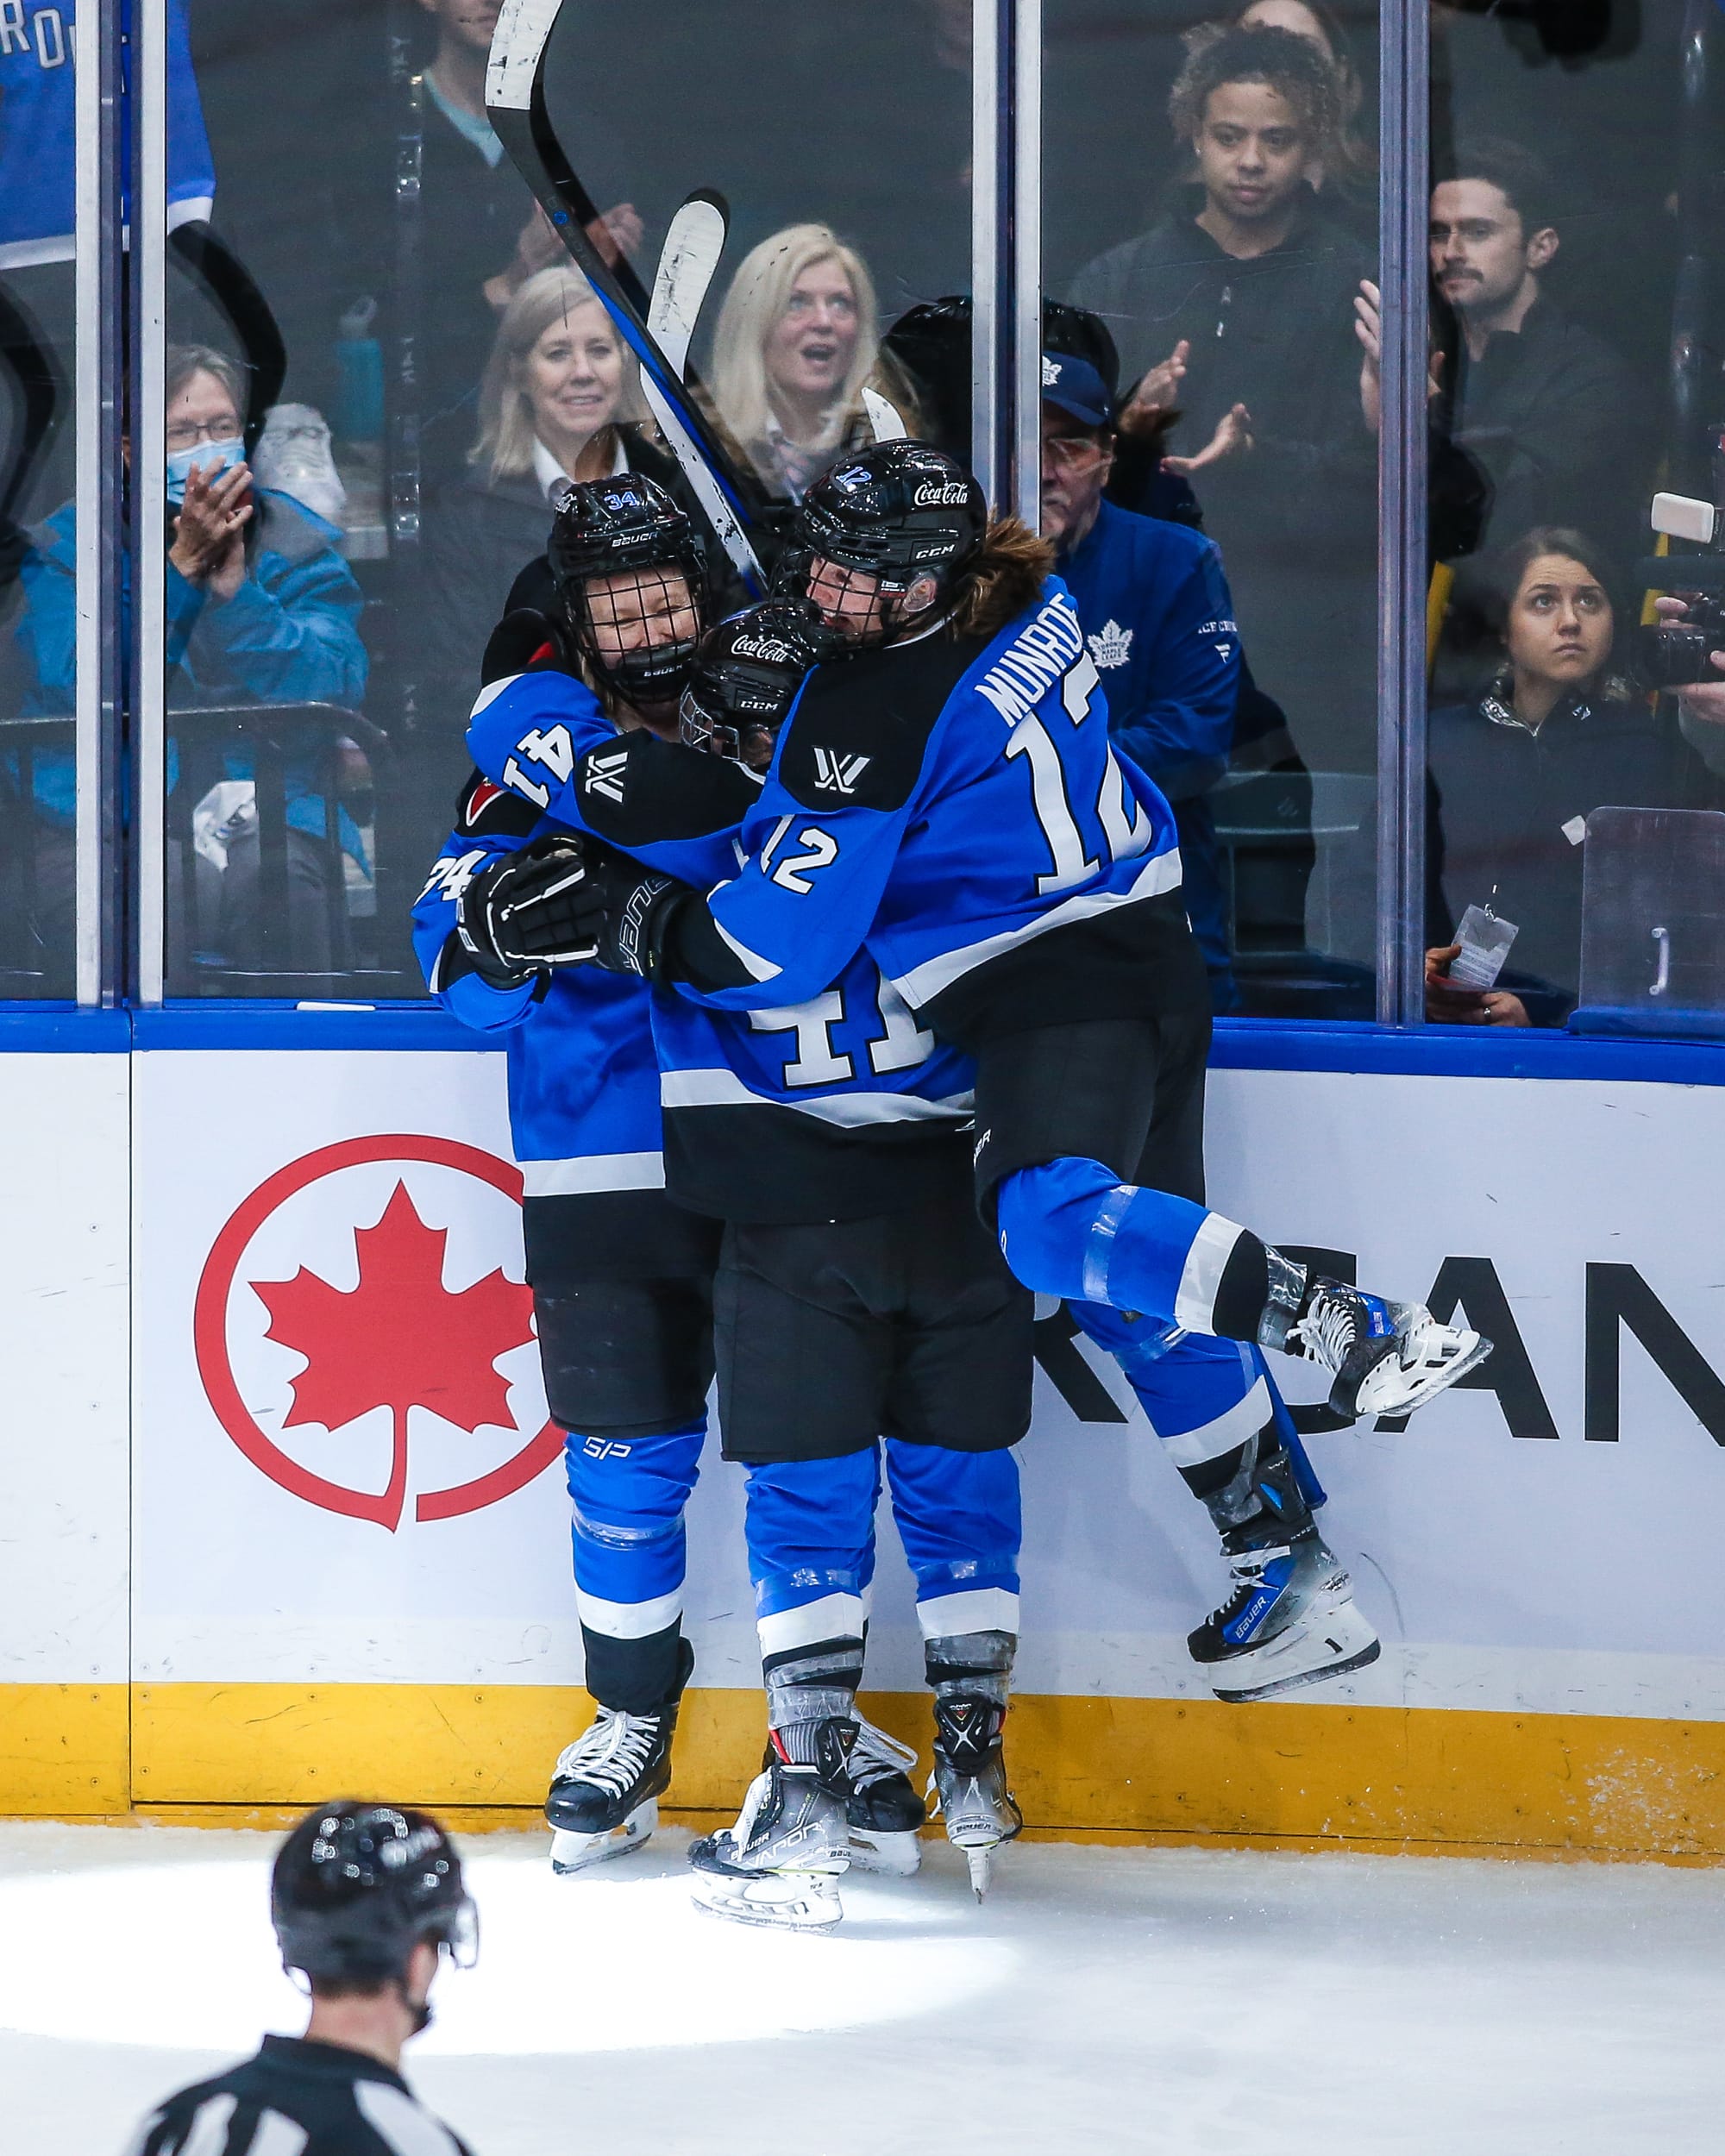 Toronto players, wearing blue home uniforms, celebrate a goal against Montréal.